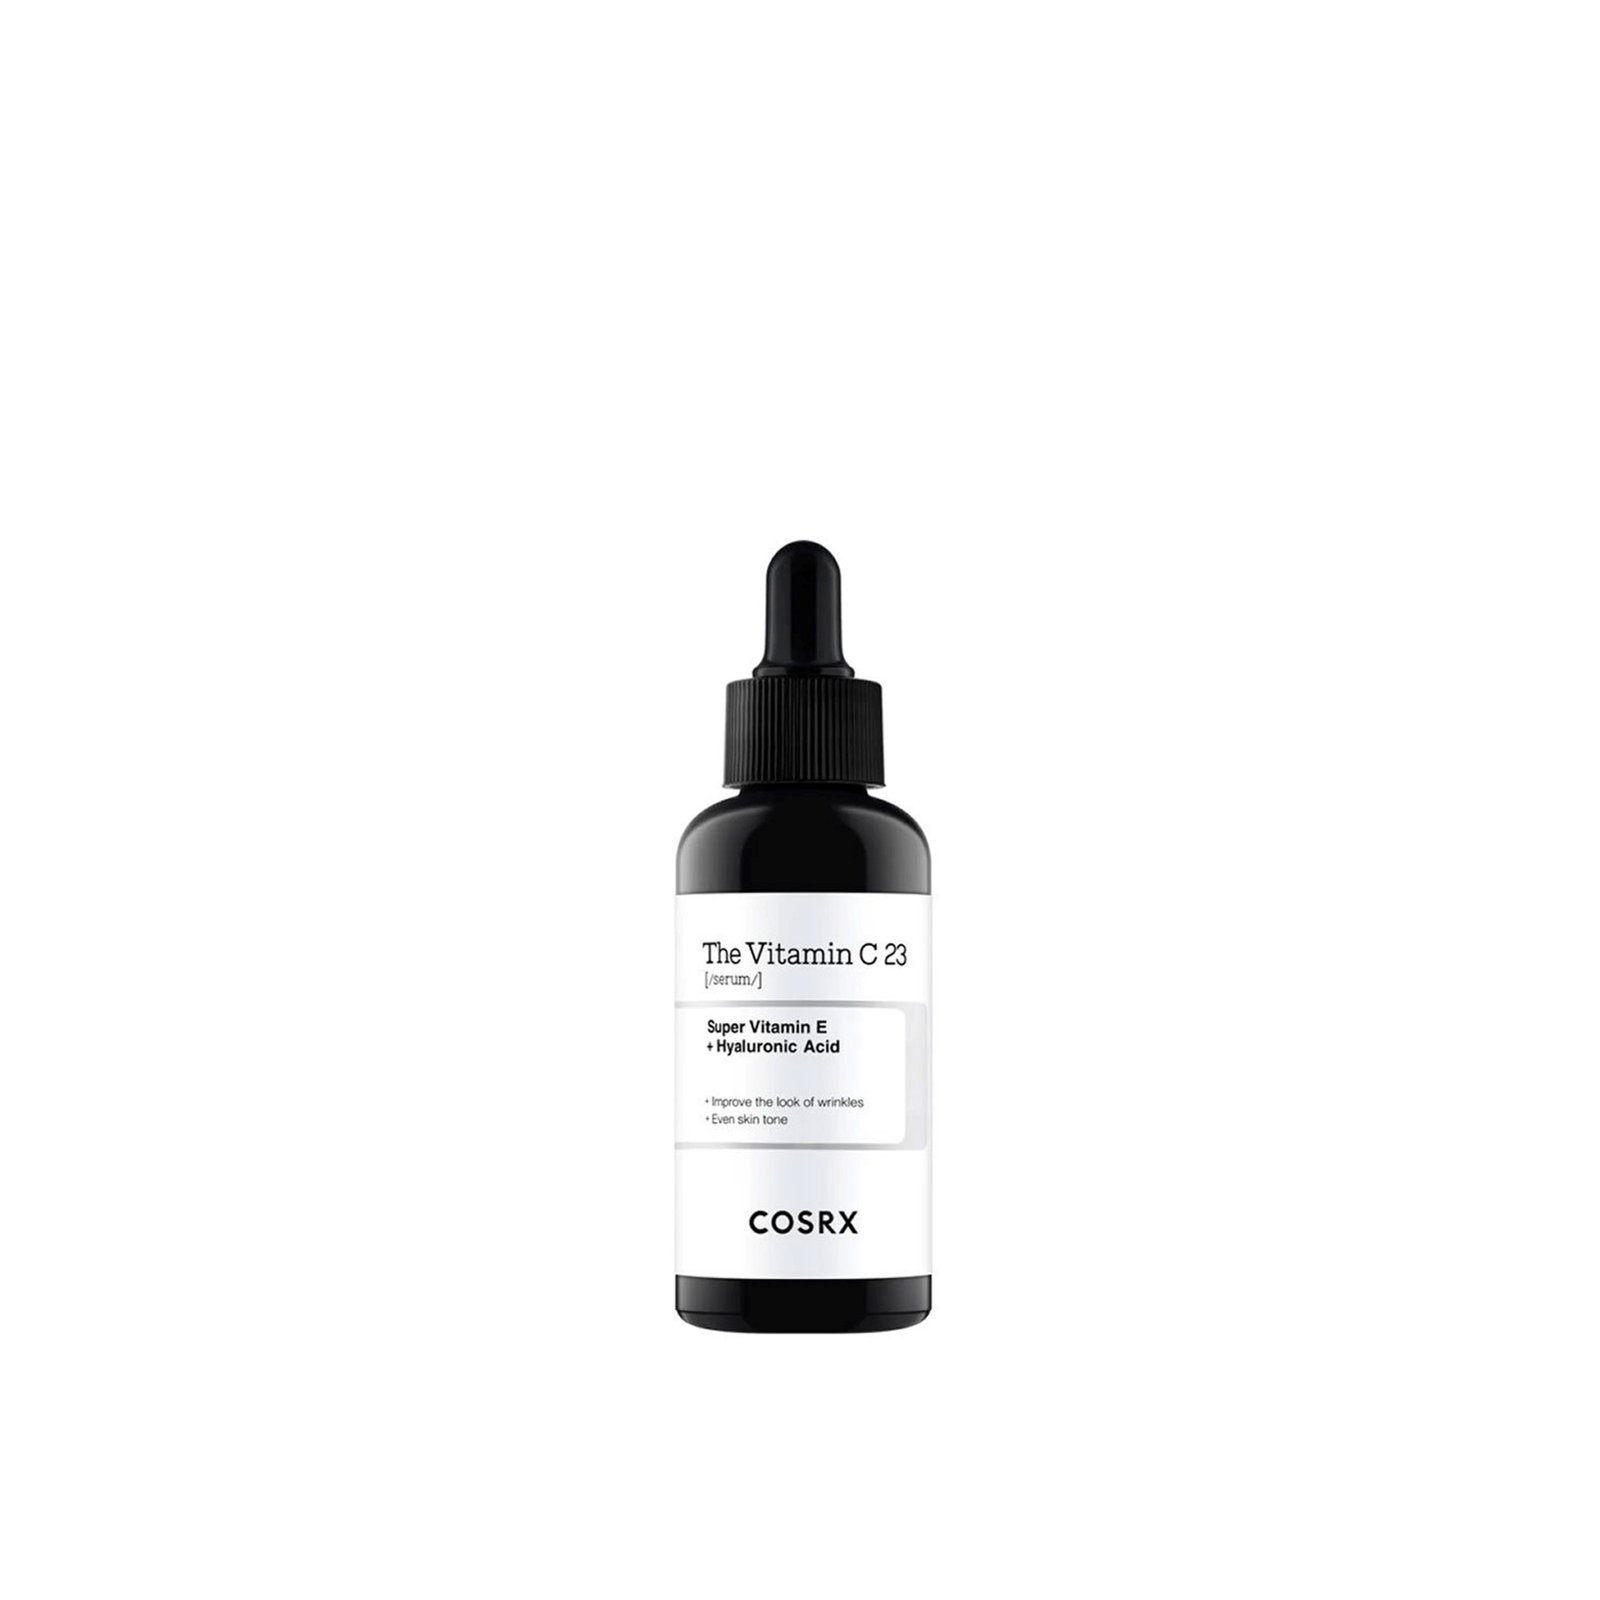 COSRX The Vitamin C 23 Serum 20g (0.70 oz)